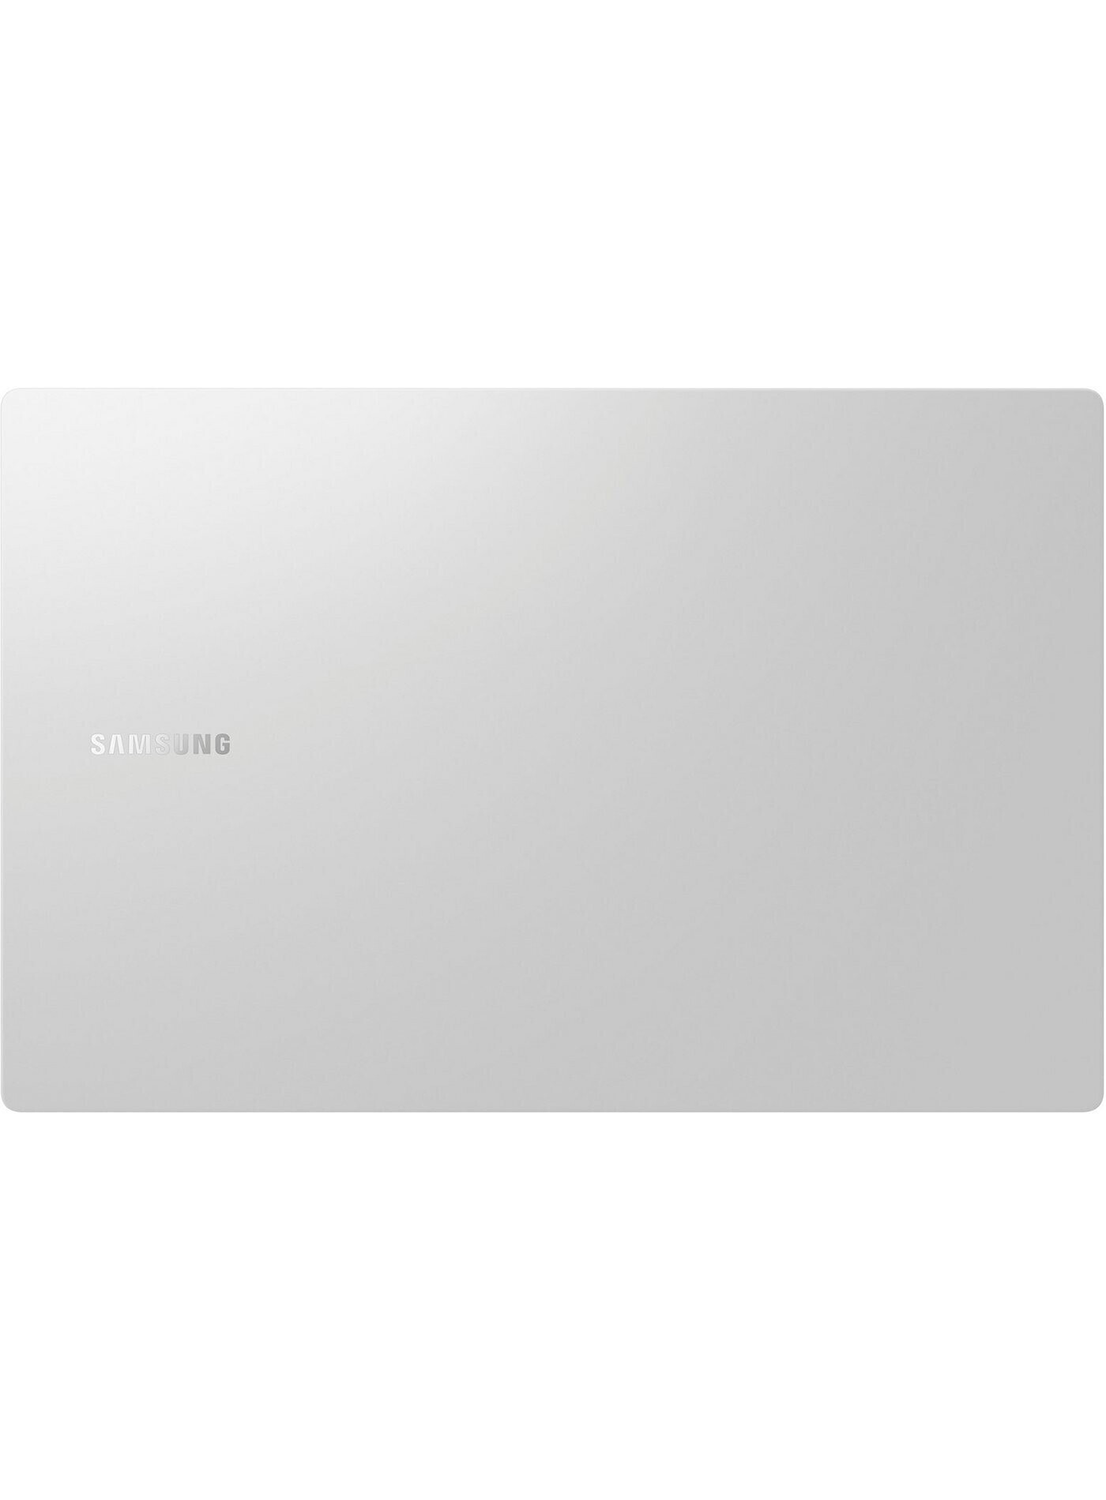 Samsung Galaxy Book Pro 512GB